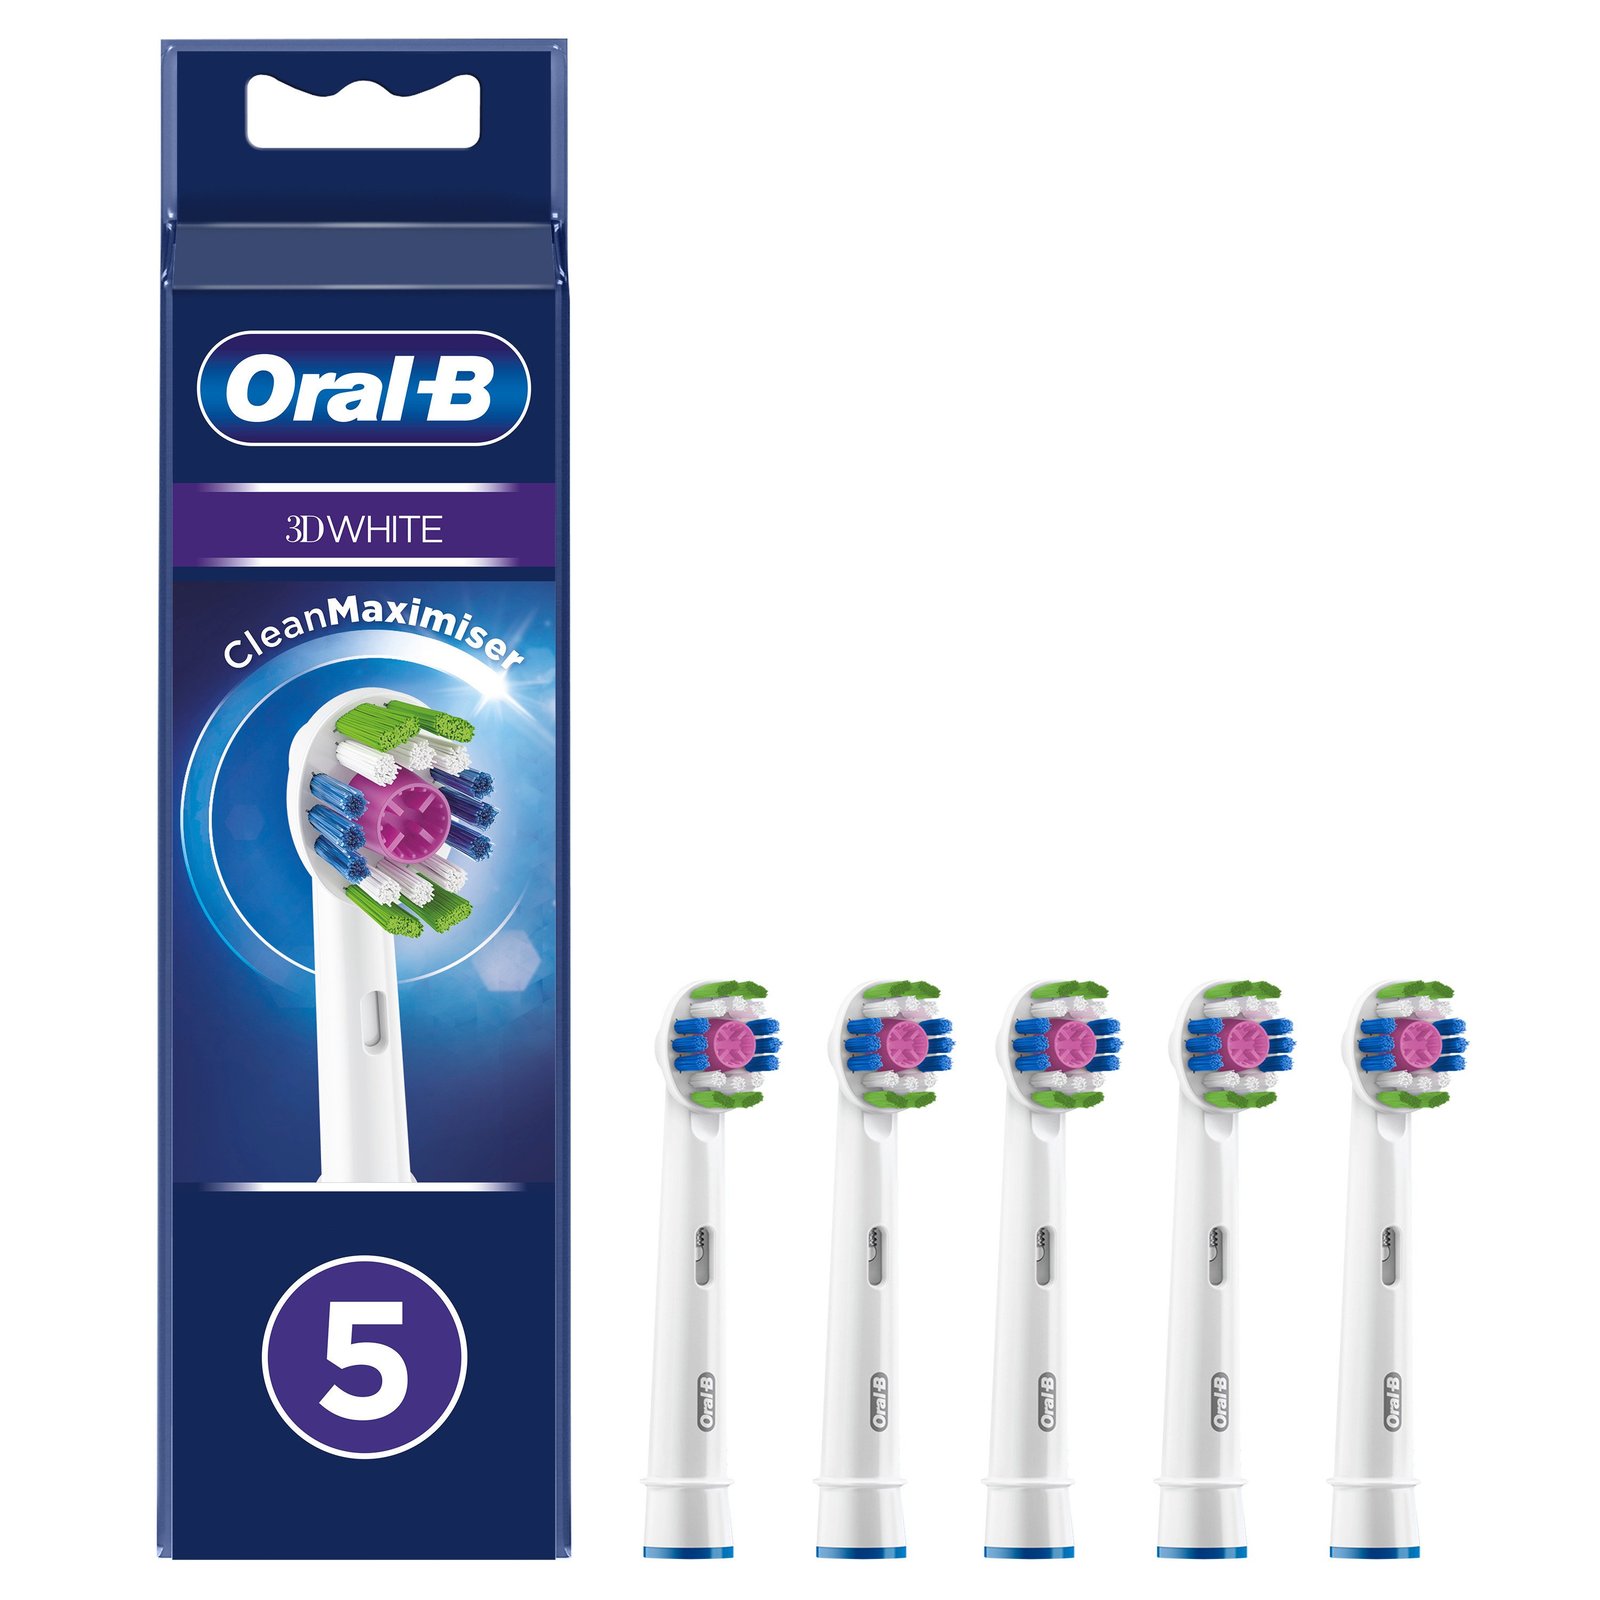 Oral-B 3D White Tandborsthuvuden 5 st